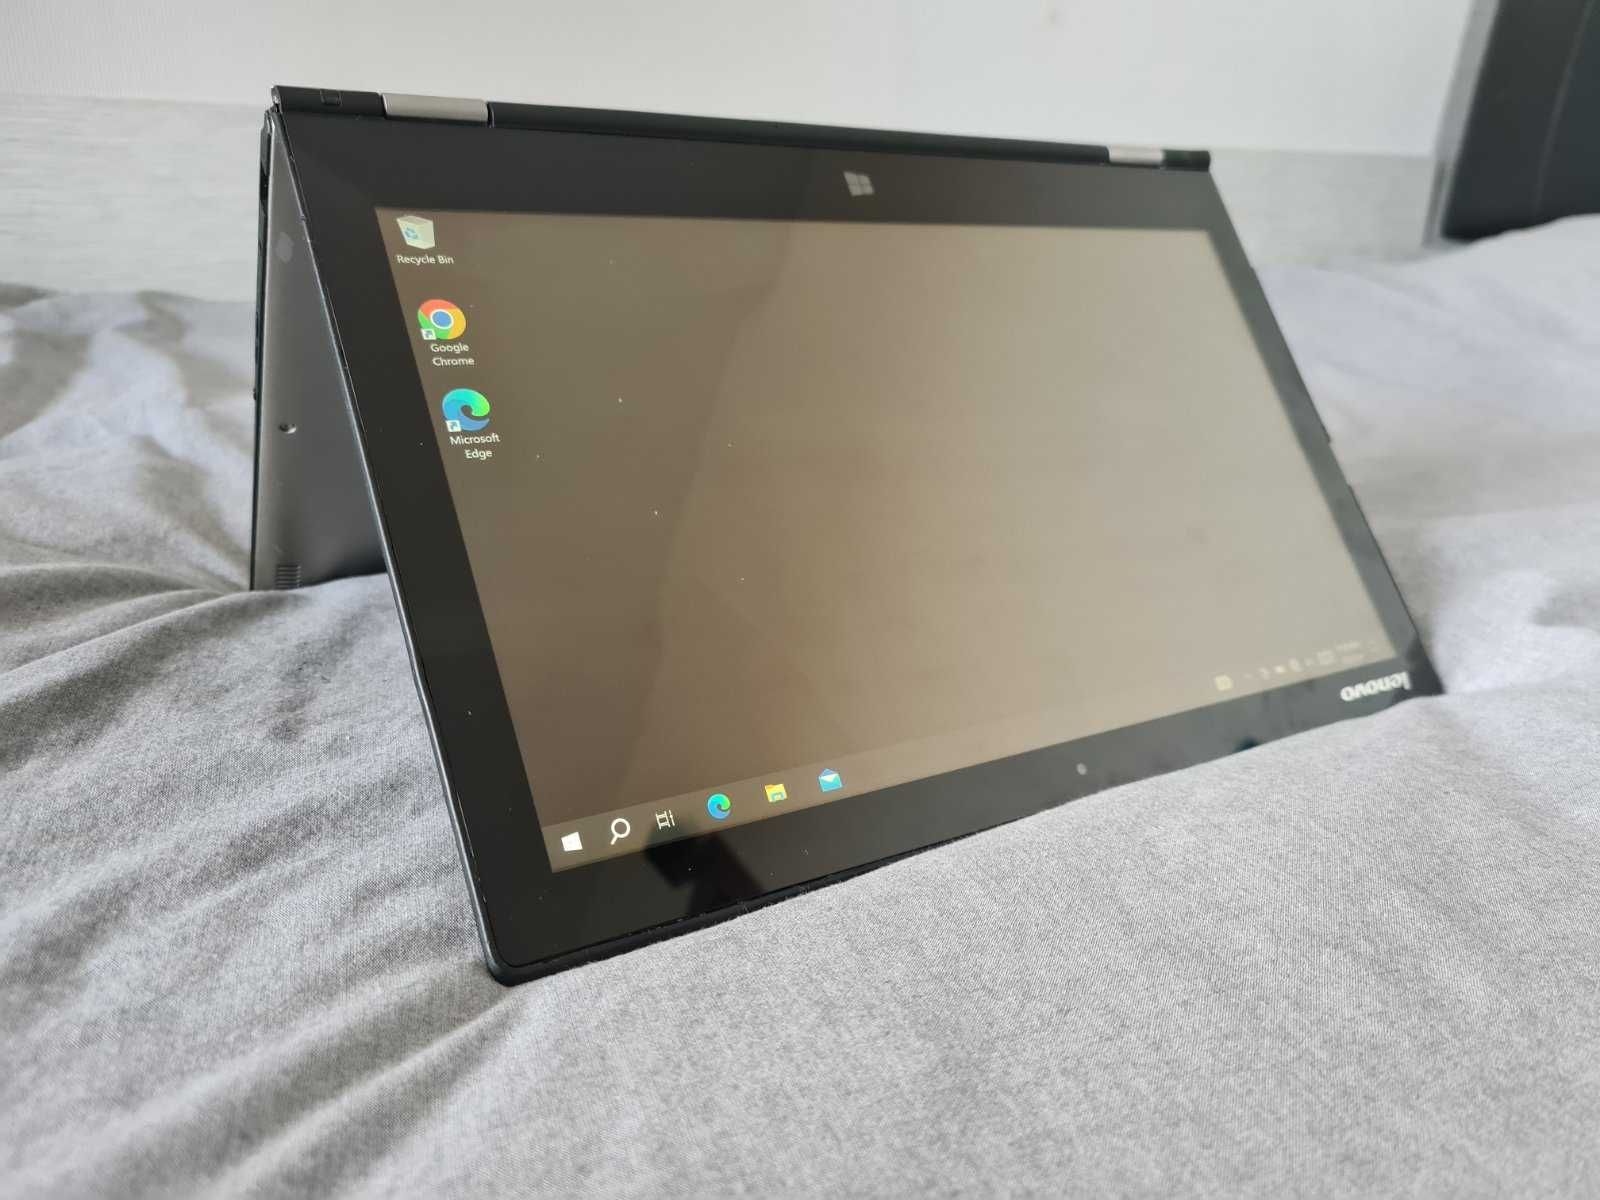 2в1 Lenovo Yoga 2 Pro Touchscreen лаптоп и таблет i5-4200U 2.3 GHz